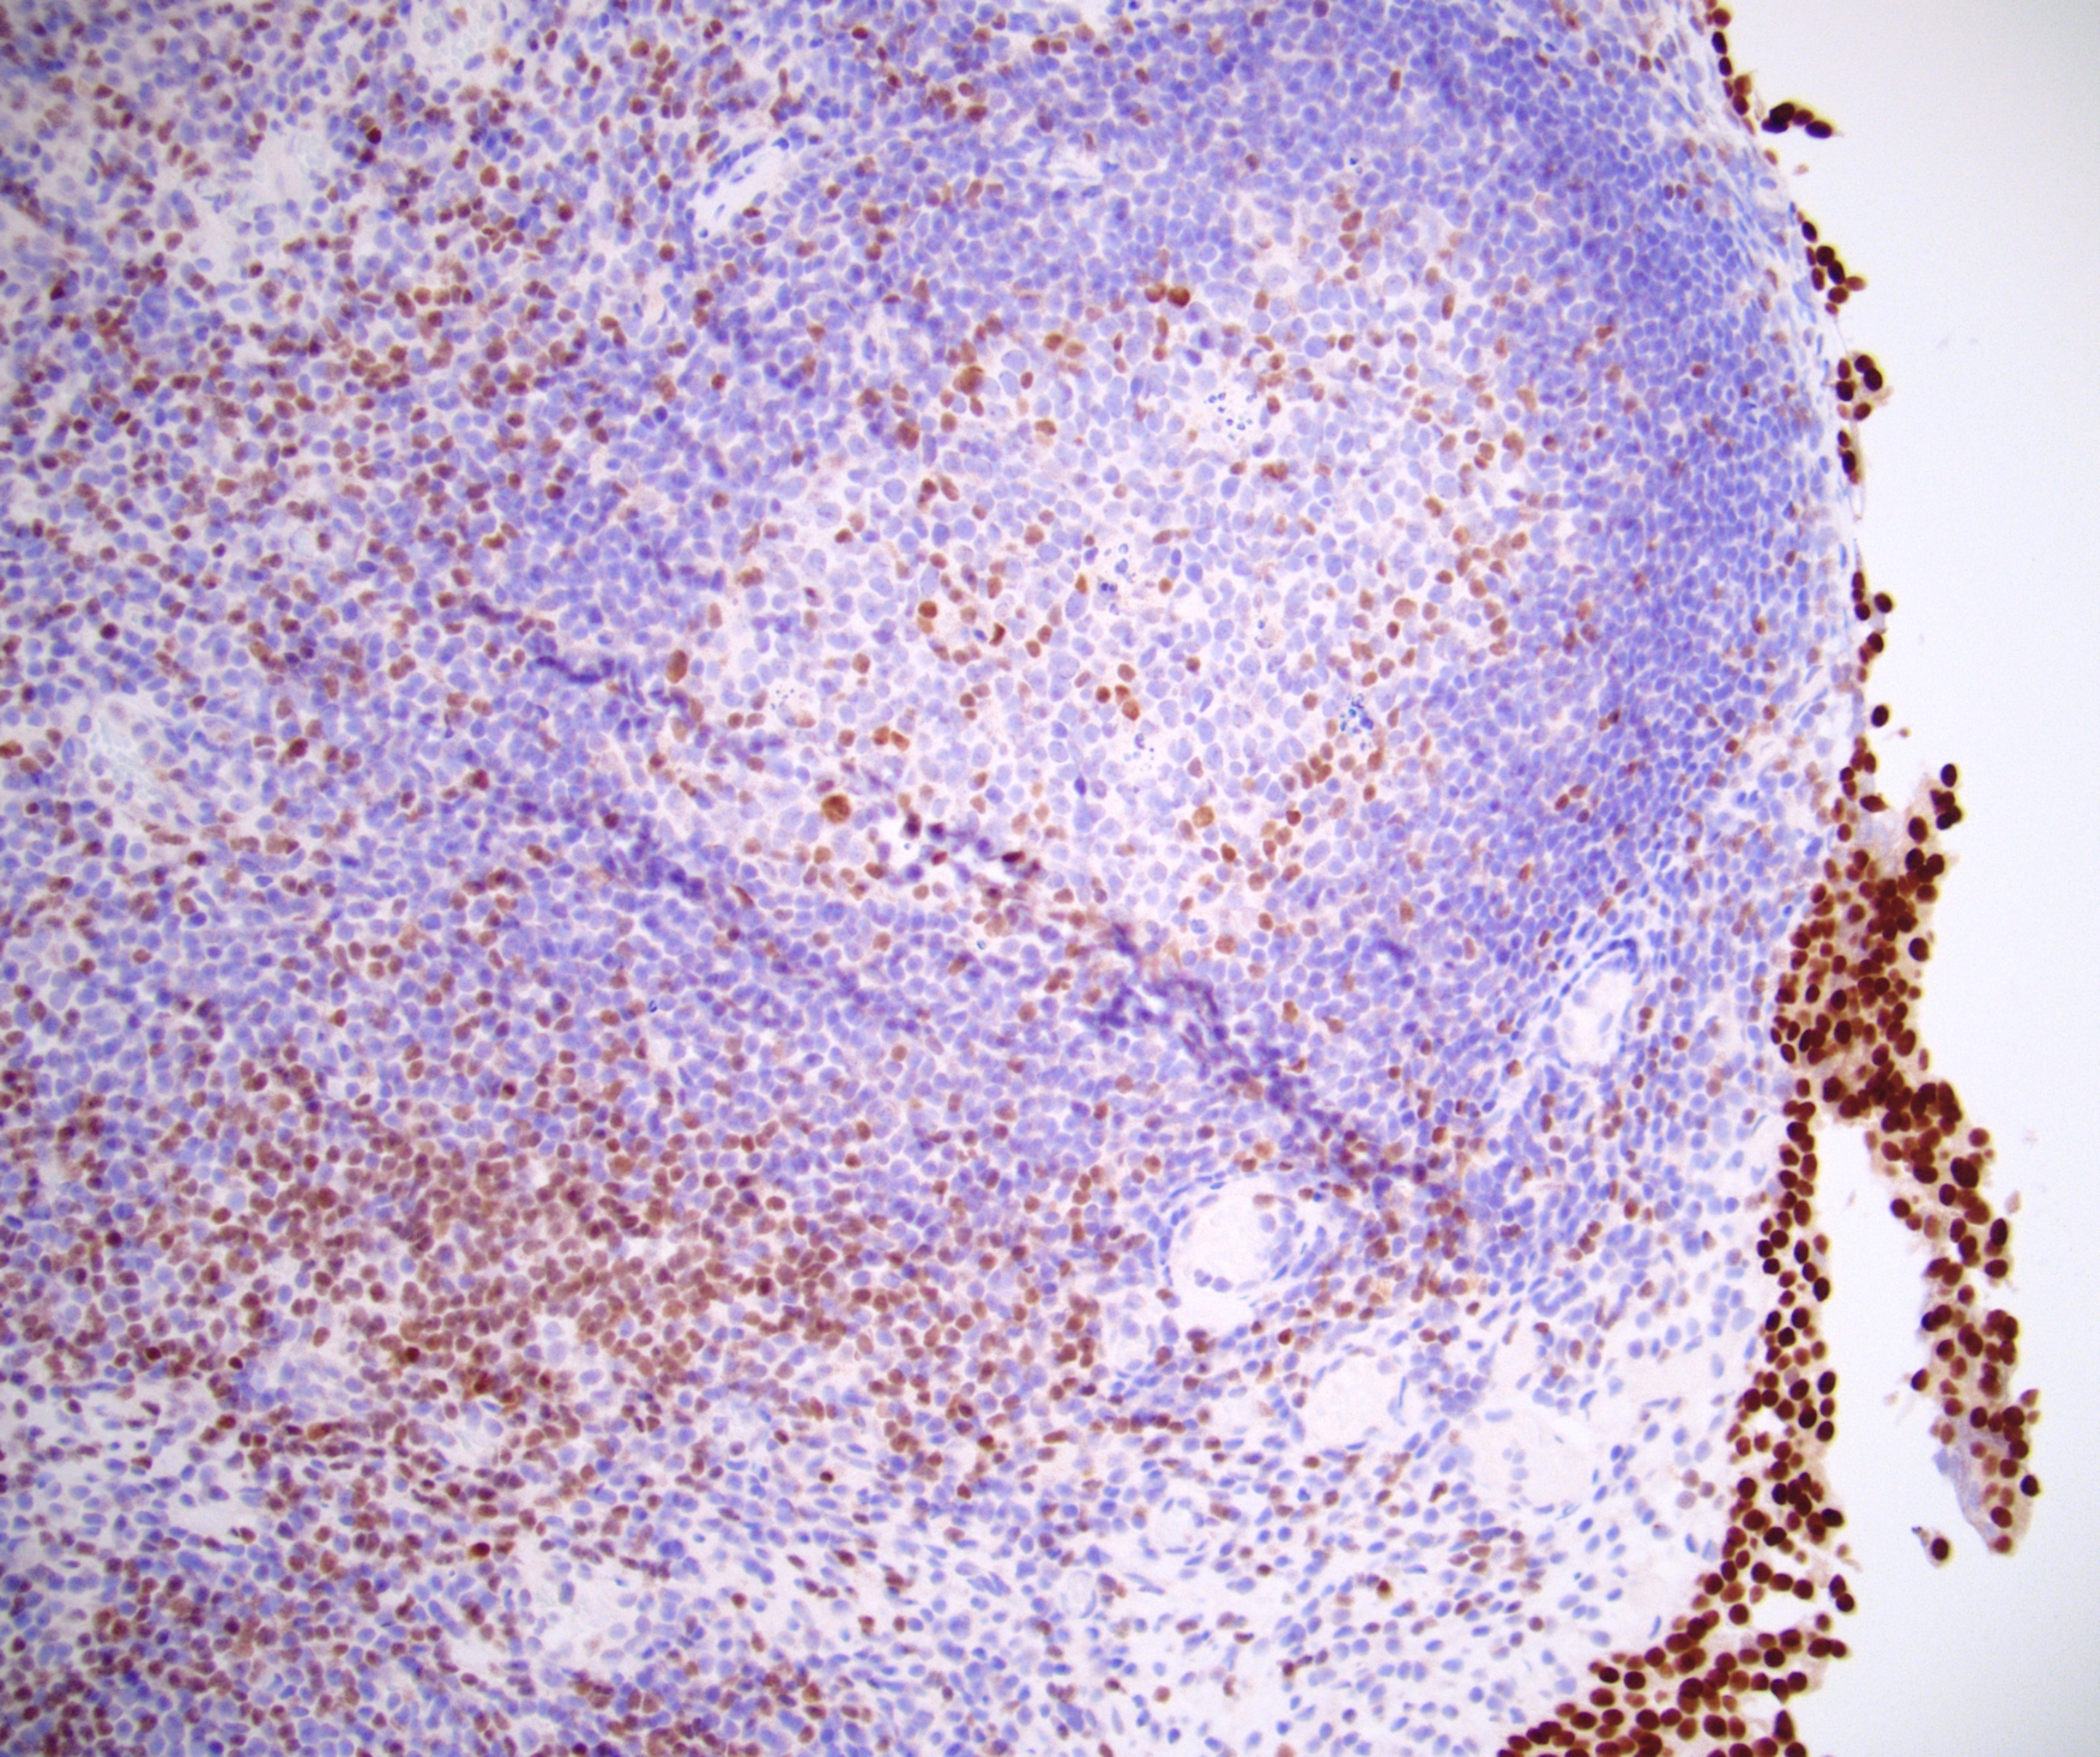 Nonneoplastic lymphocytes